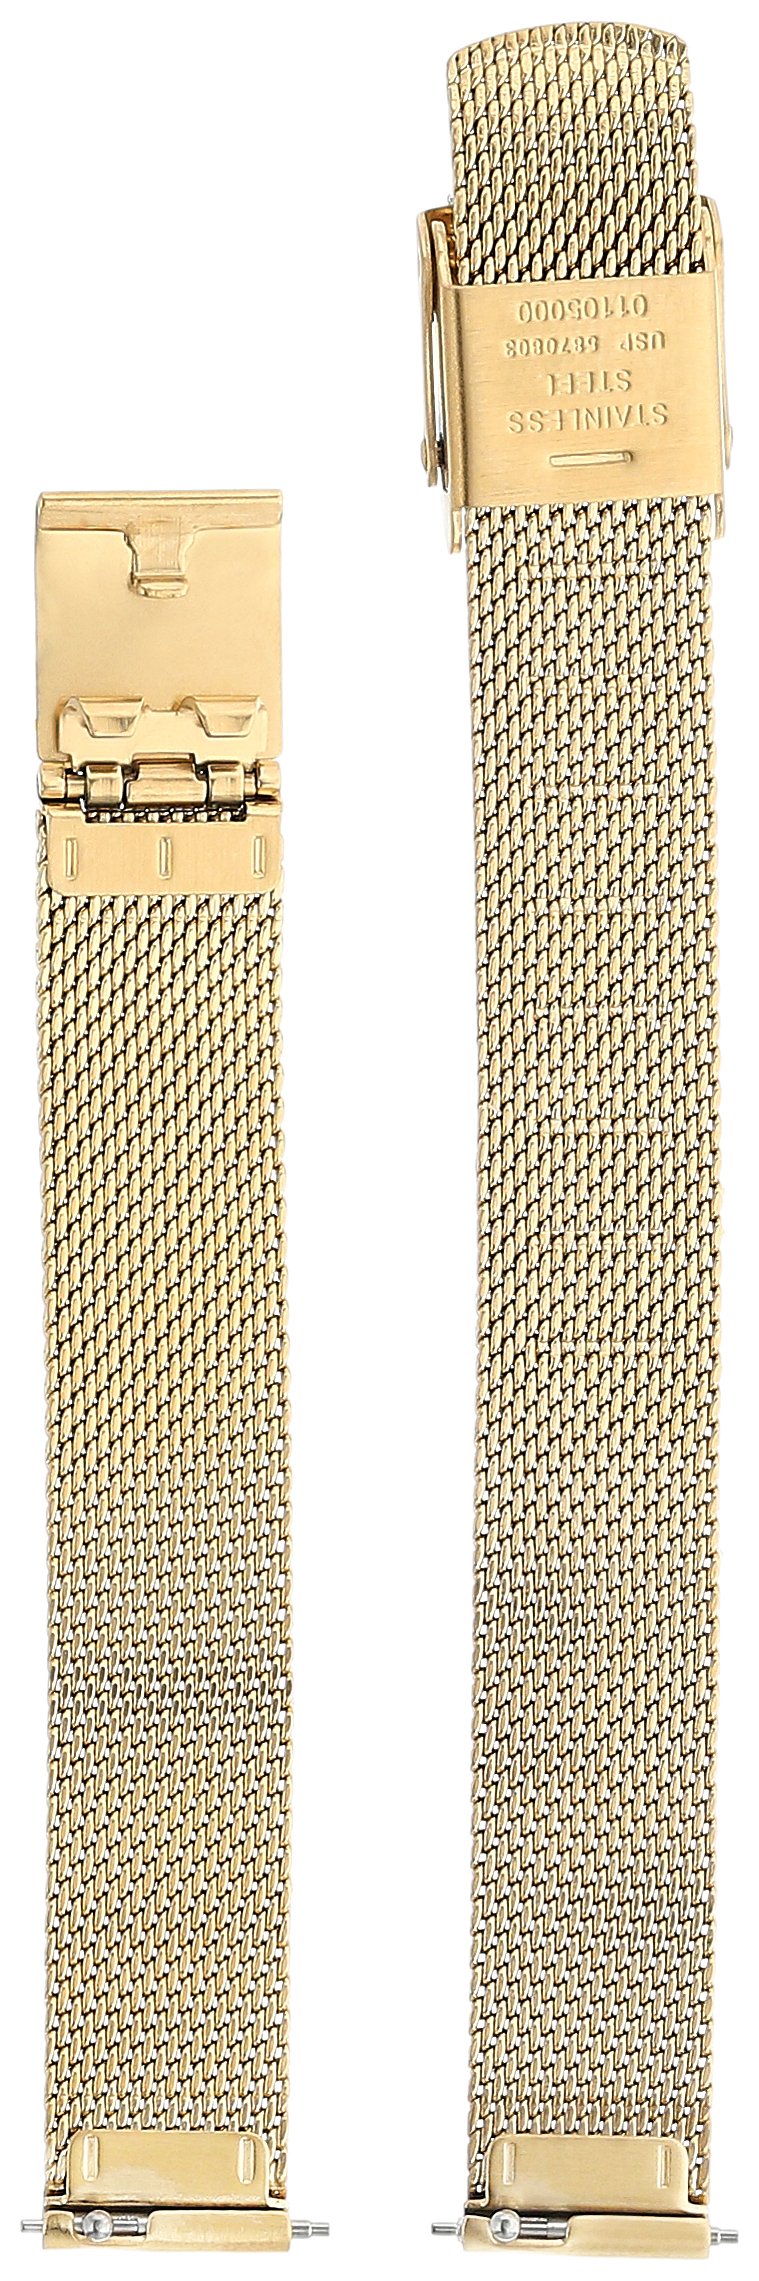 Skagen Women's 12mm Stainless Steel Mesh Watch Strap, Color: Gold-tone (Model: SKB2049)